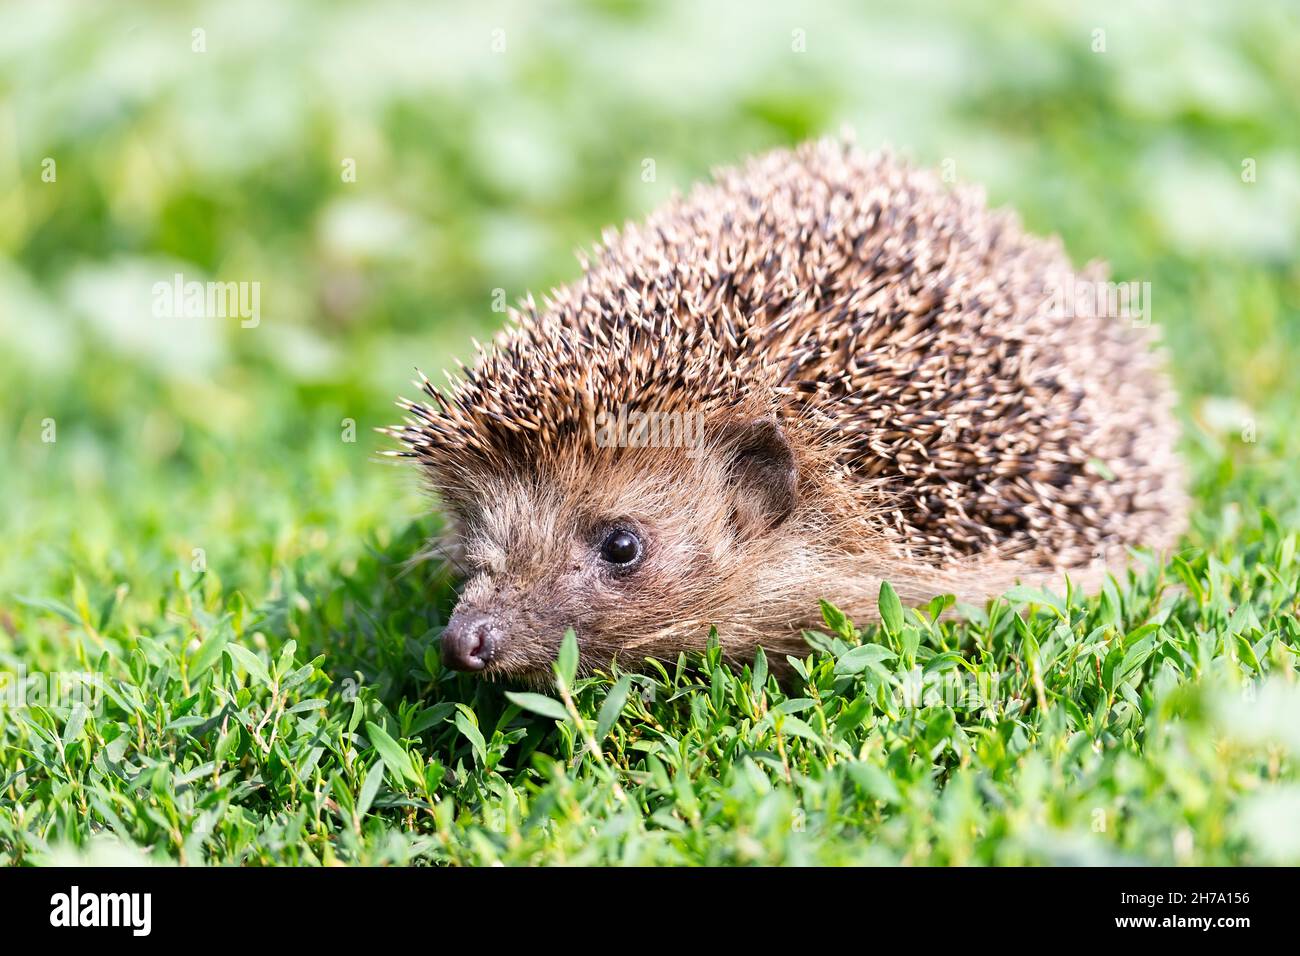 Hedgehog (Scientific name: Erinaceus Europaeus) close up of a wild, native, European hedgehog, facing right in natural garden habitat on green grass l Stock Photo